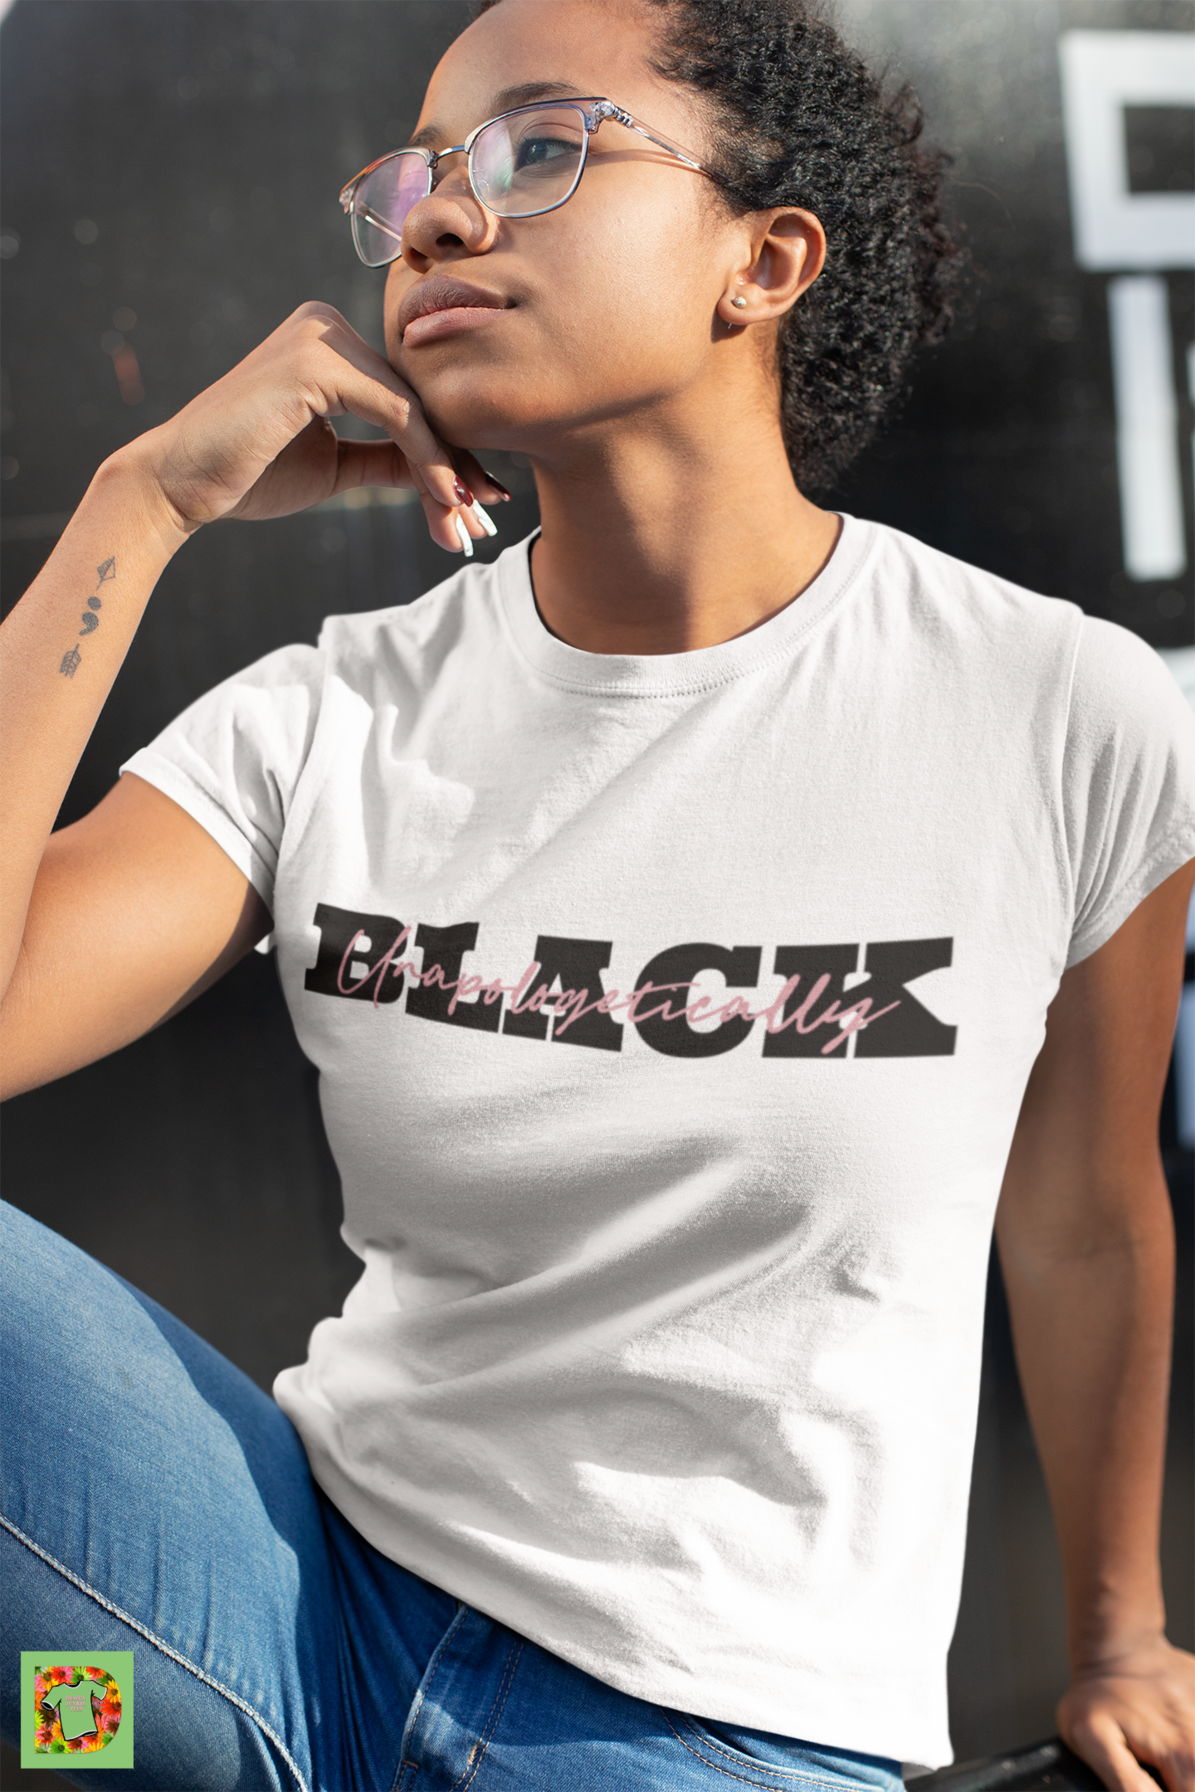 Unapologetically Black Short-Sleeve Unisex T-Shirt